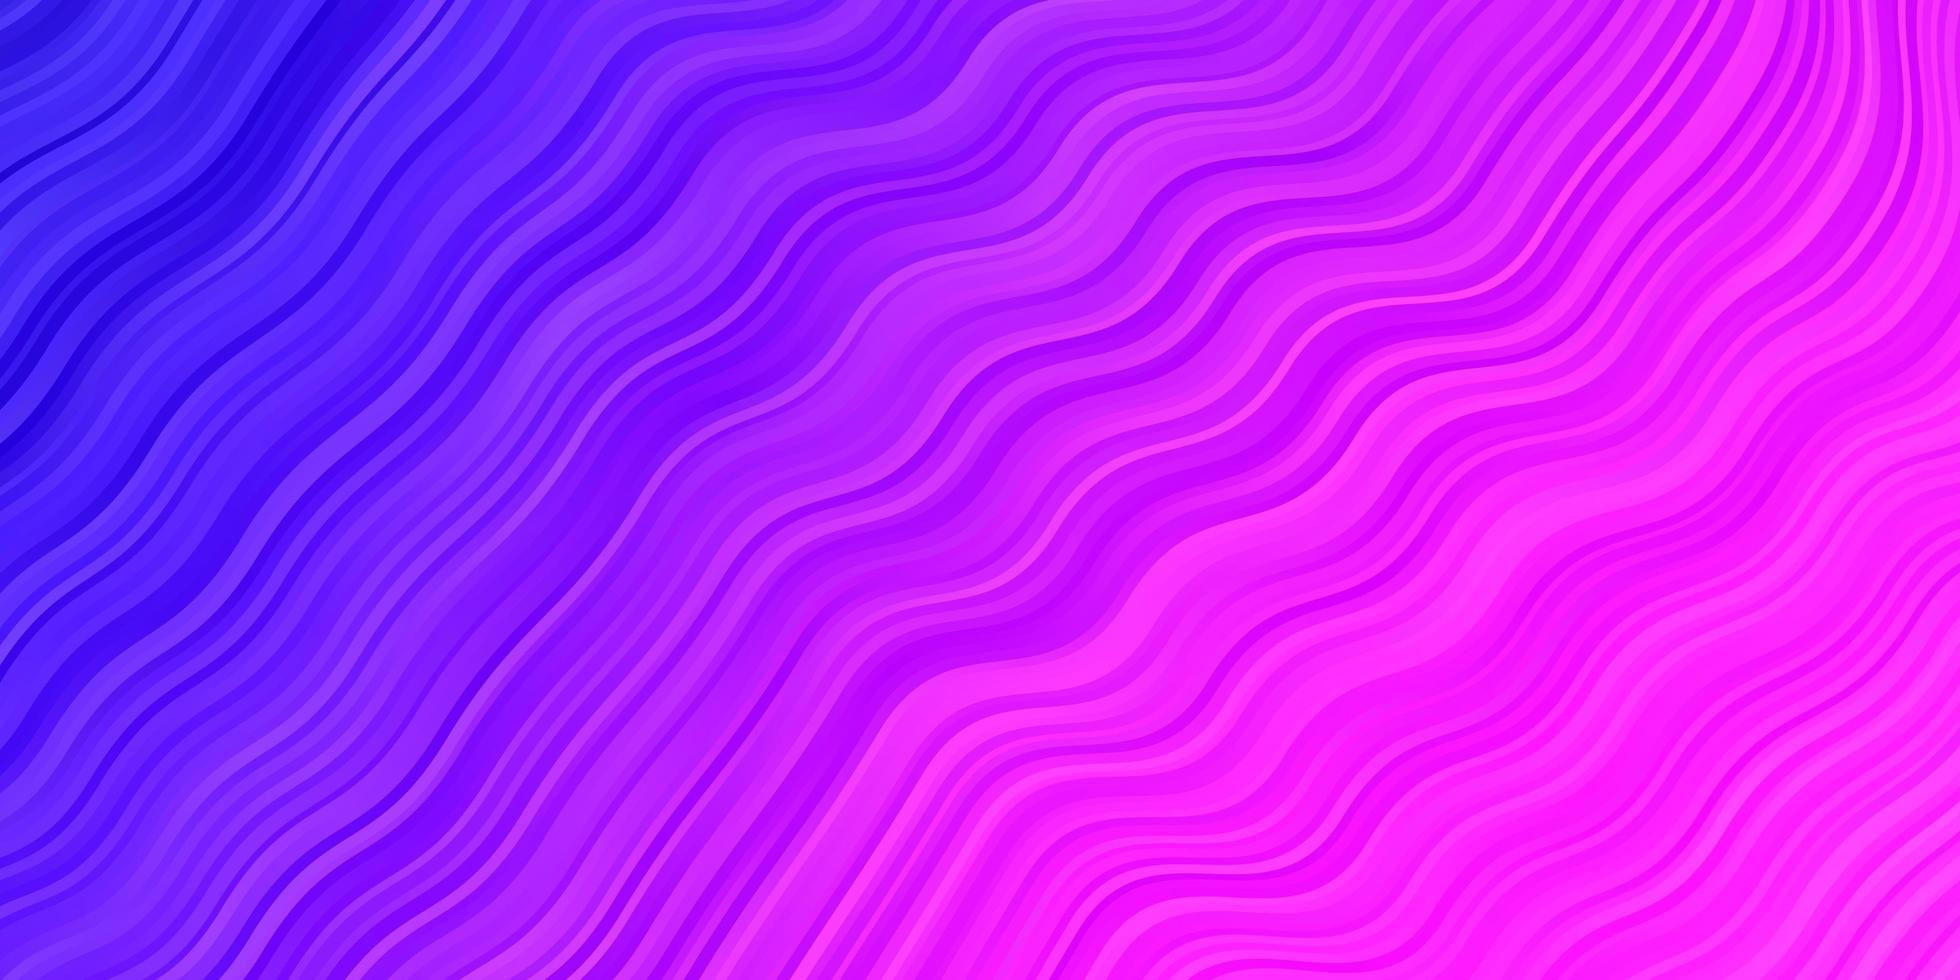 diseño de vector rosa púrpura claro con curvas